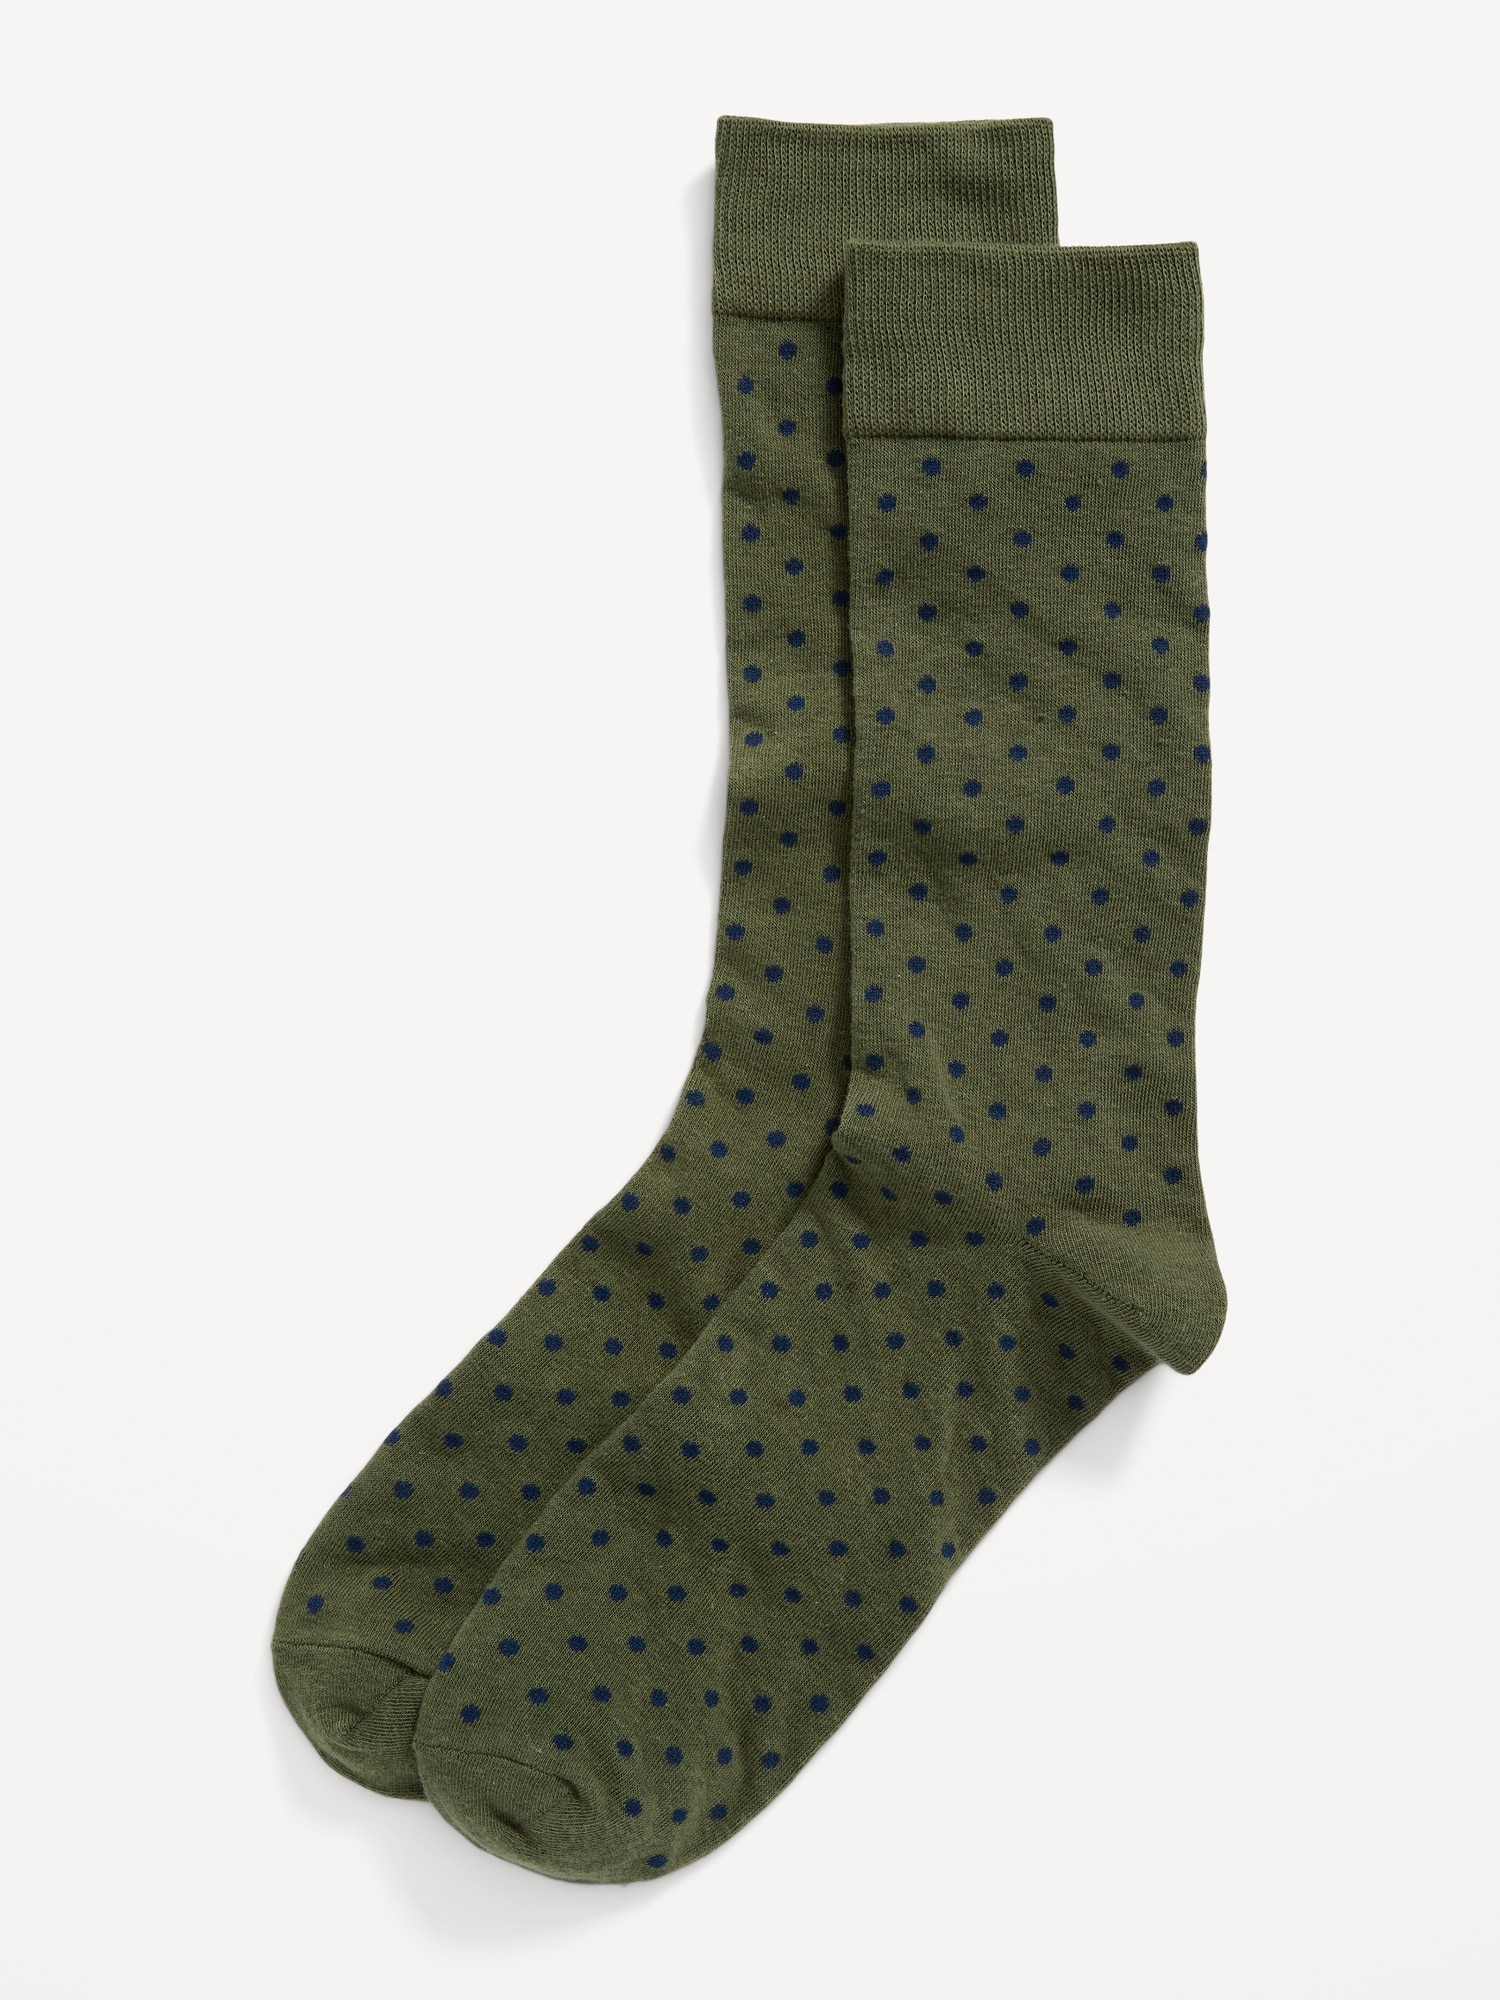 Old Navy Printed Novelty Statement Socks for Men green. 1